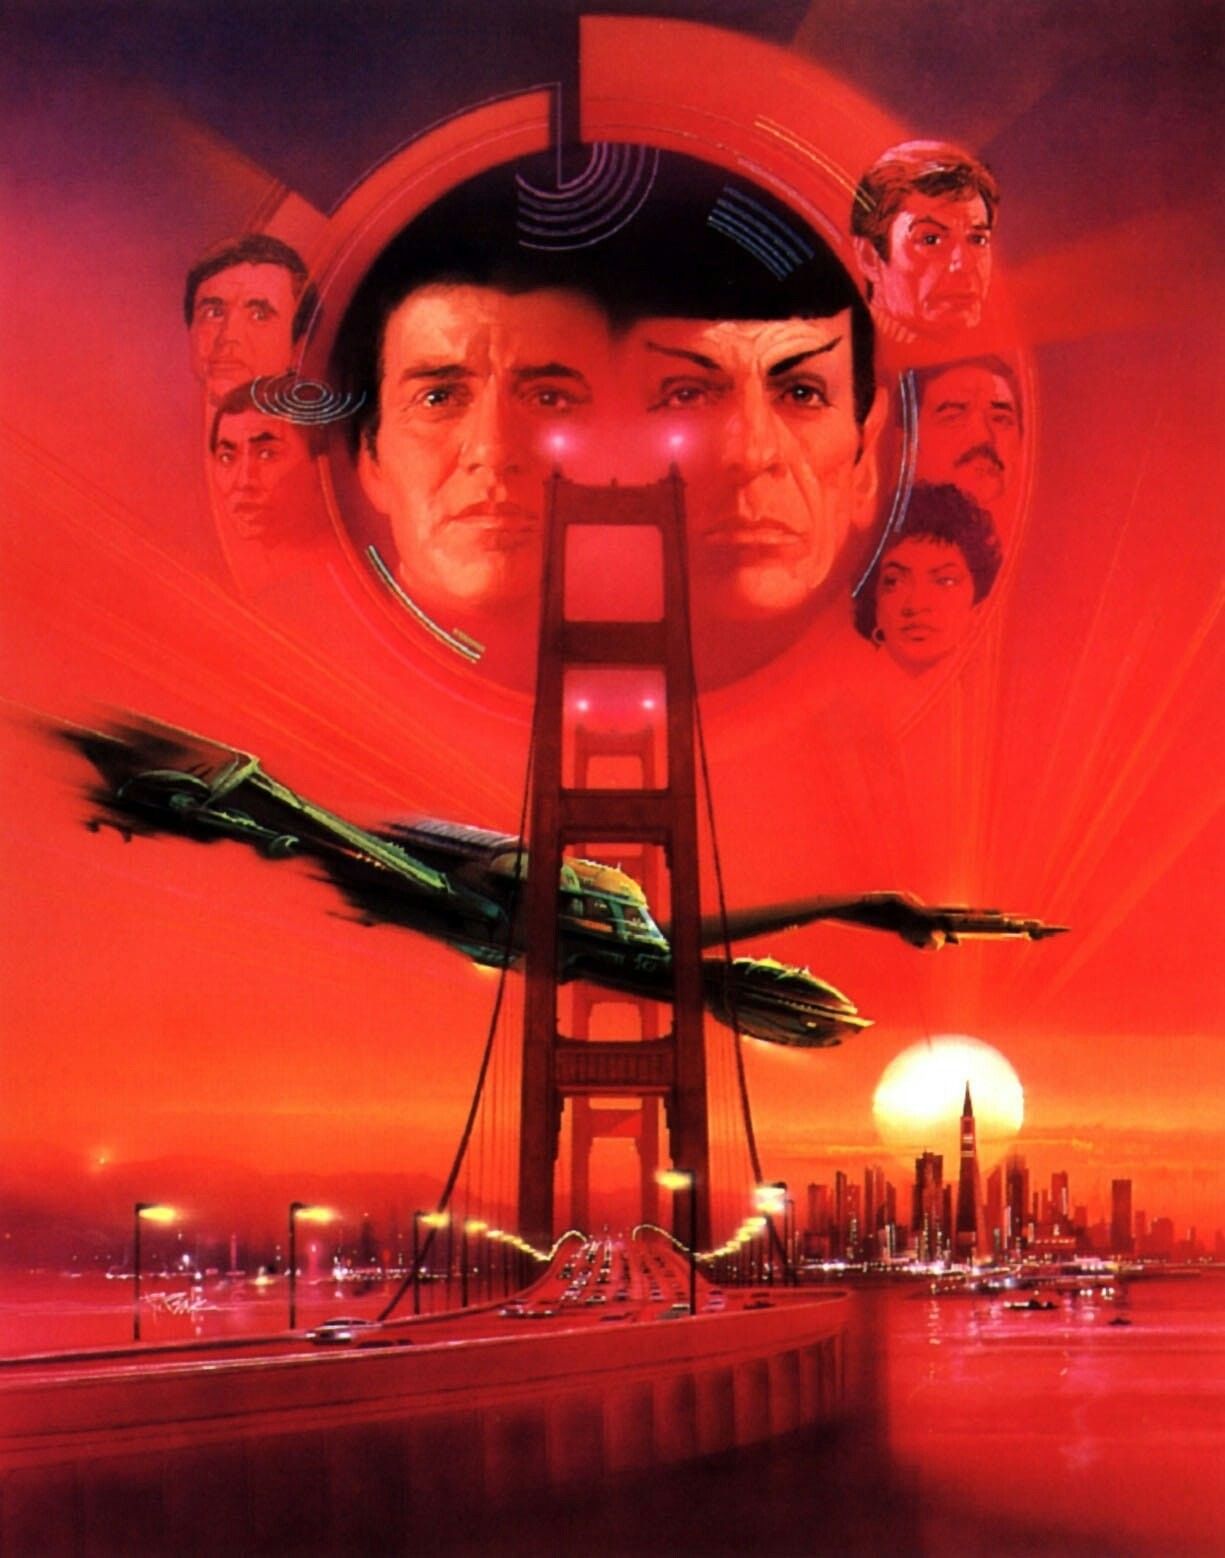 Star Trek IV The Voyage Home textless movie poster Star Trek movie posters and artwork #startrek #startrekmovies. Star trek art, Watch star trek, Star trek movies